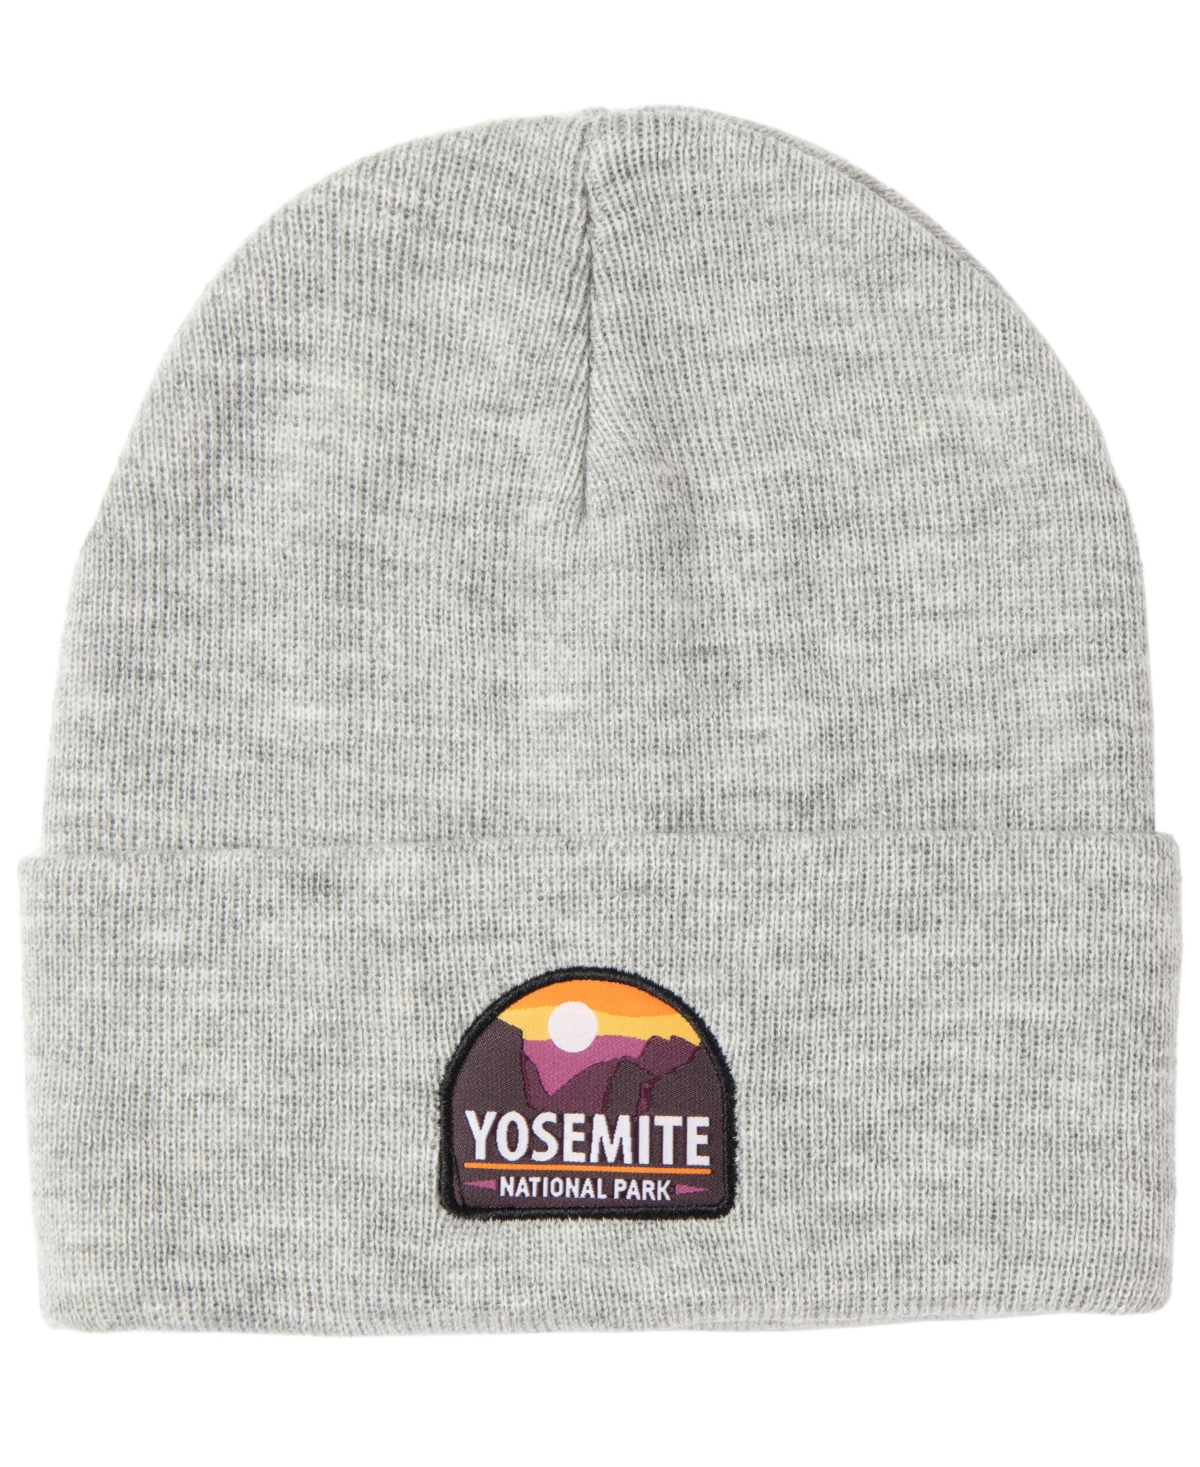 Men's Cuffed Knit Beanie - Yosemite Gray